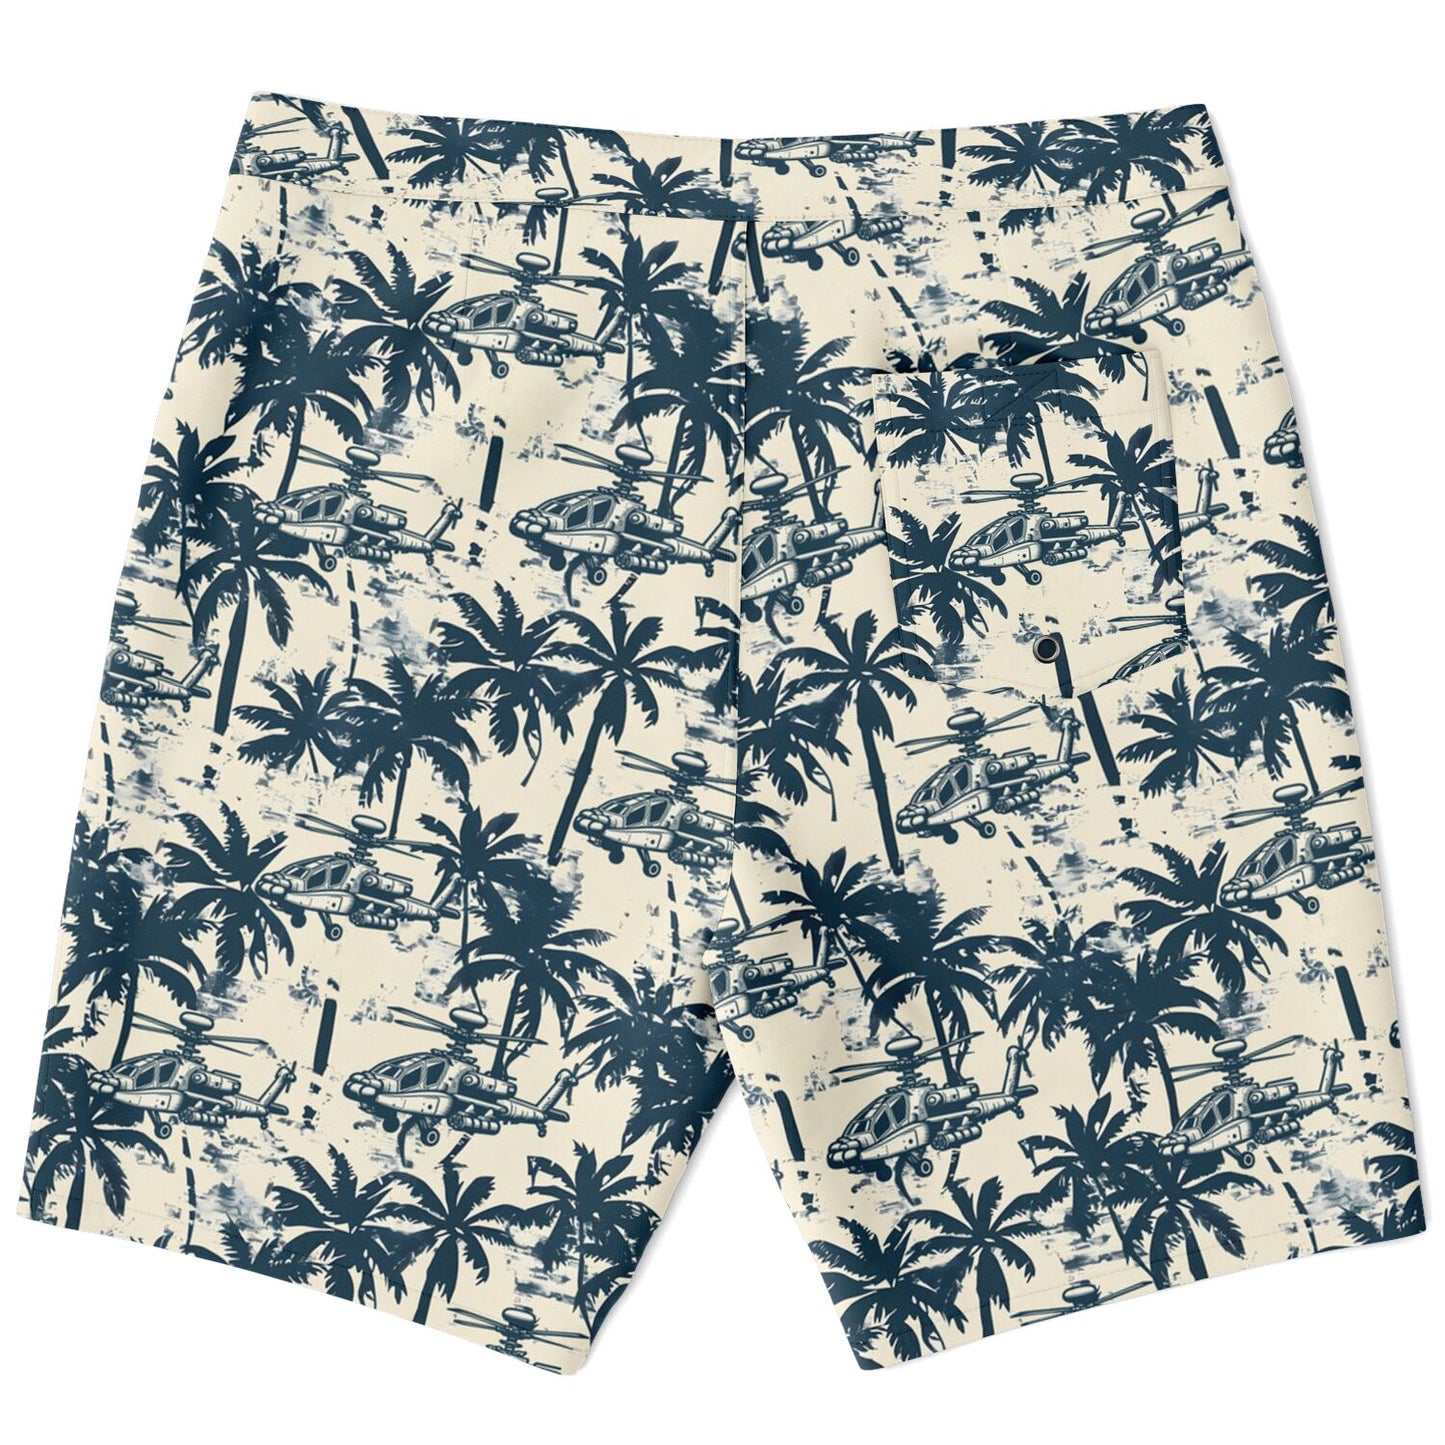 Aloha Attack Board Shorts with Palm trees